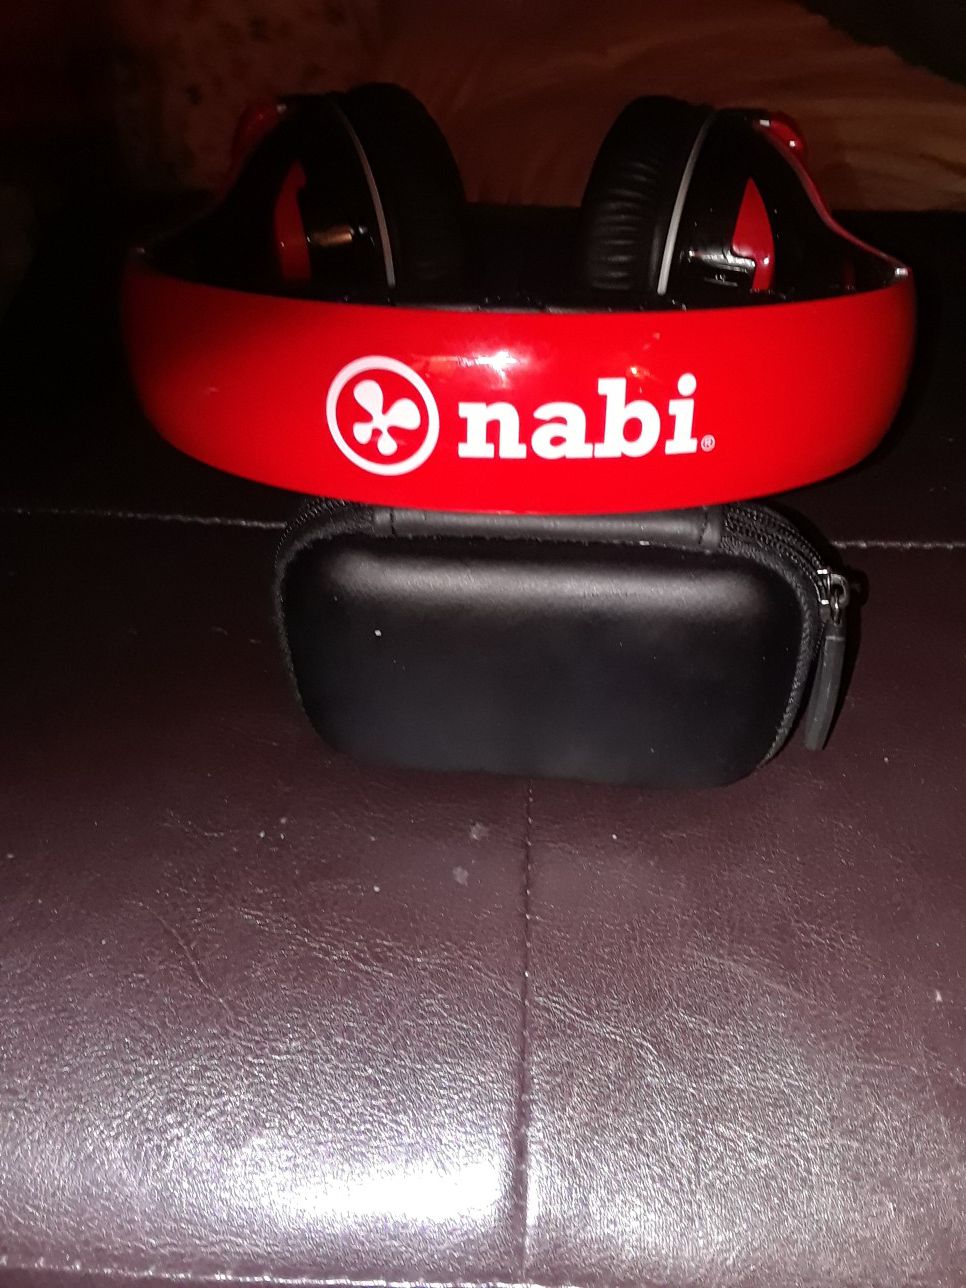 nabi,#1,Headphones 4kids,new